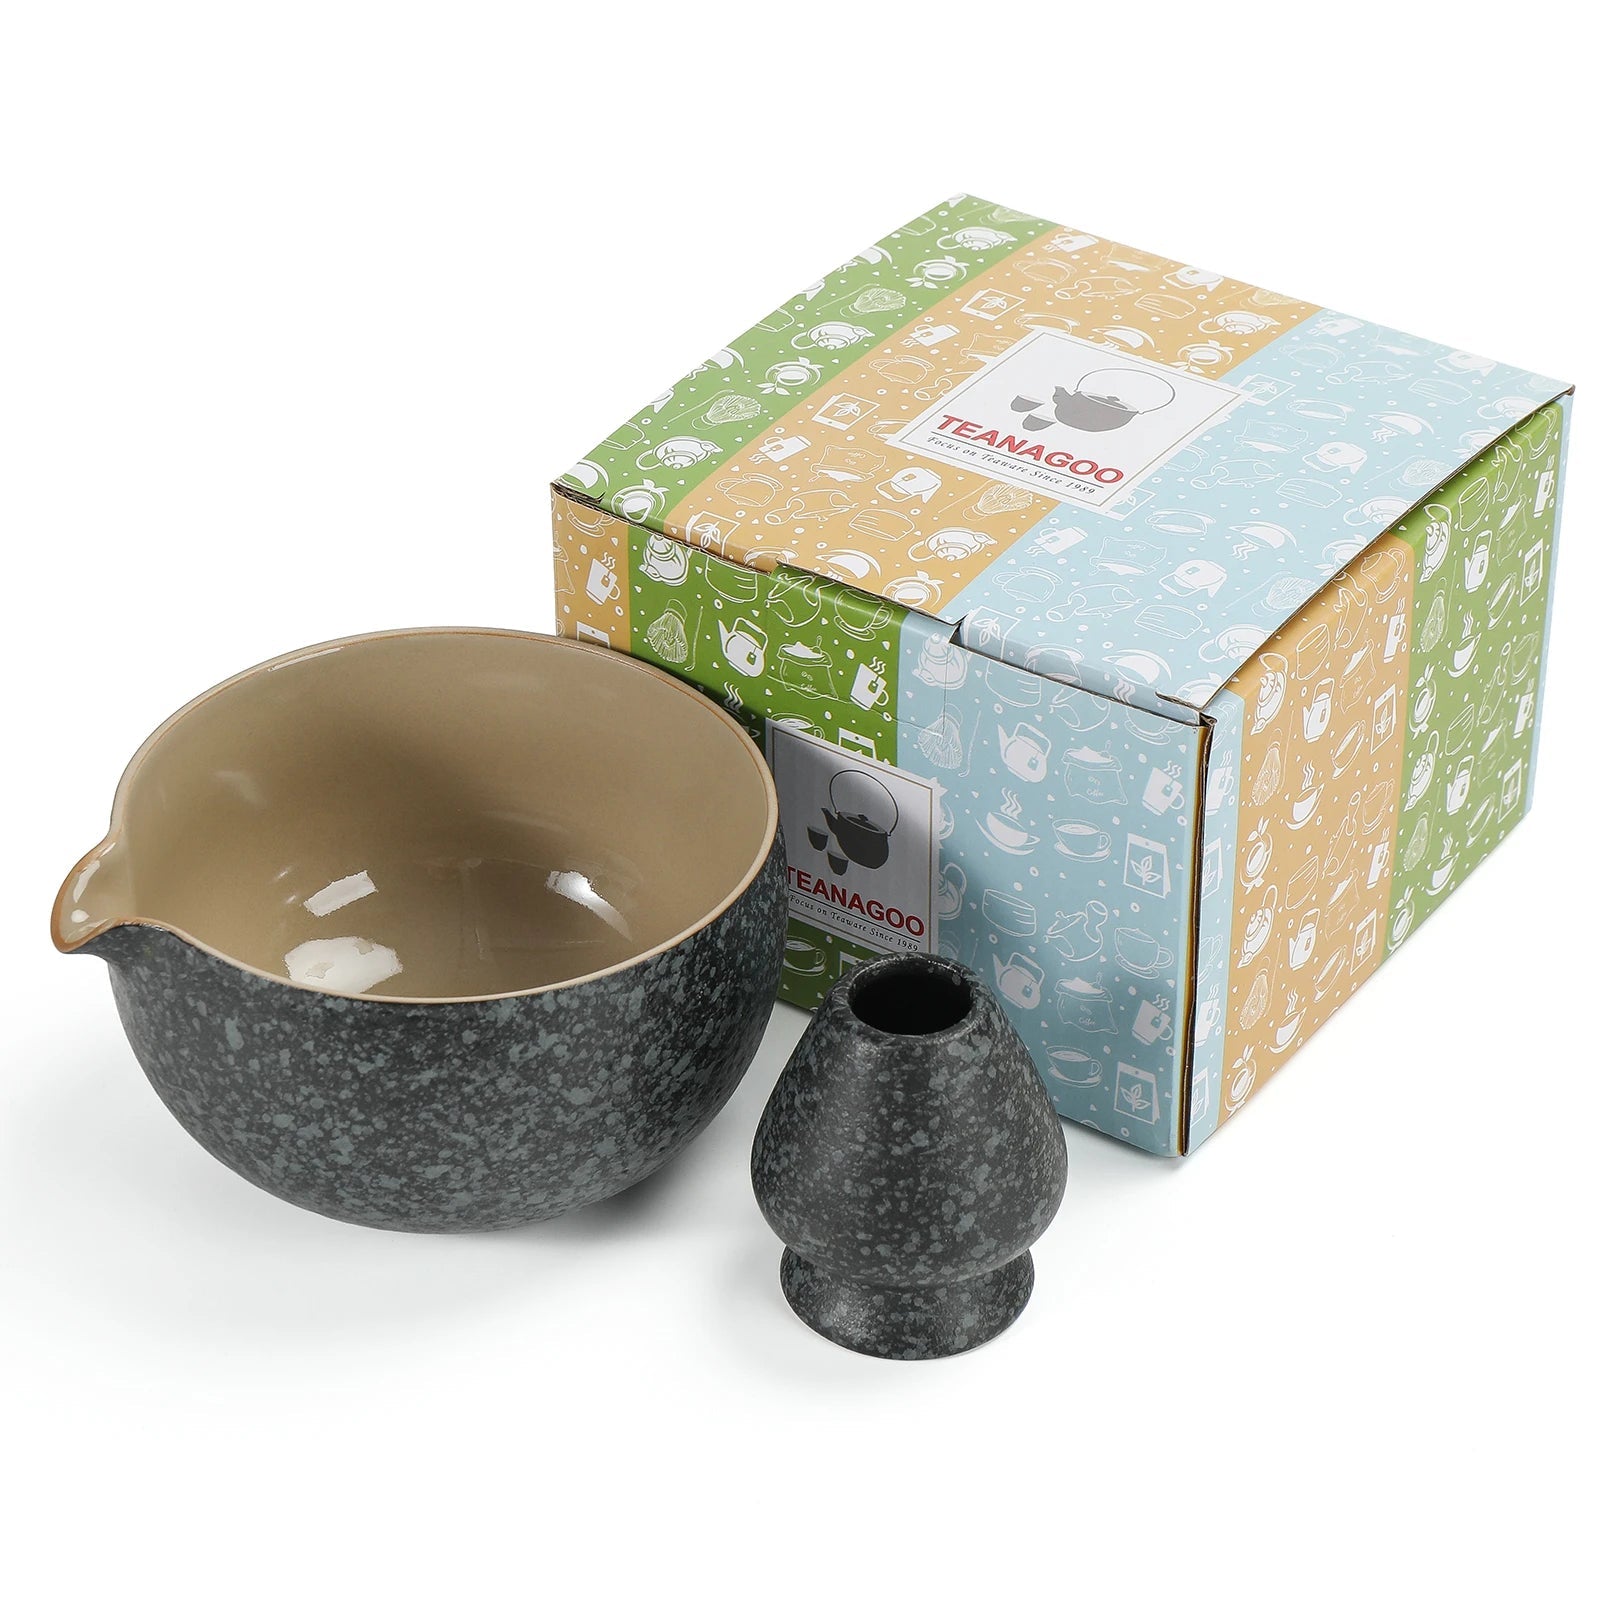 Ceramic Matcha Tea Bowl & Holder Japanese Matcha Ceremony Set|TEANAGOO